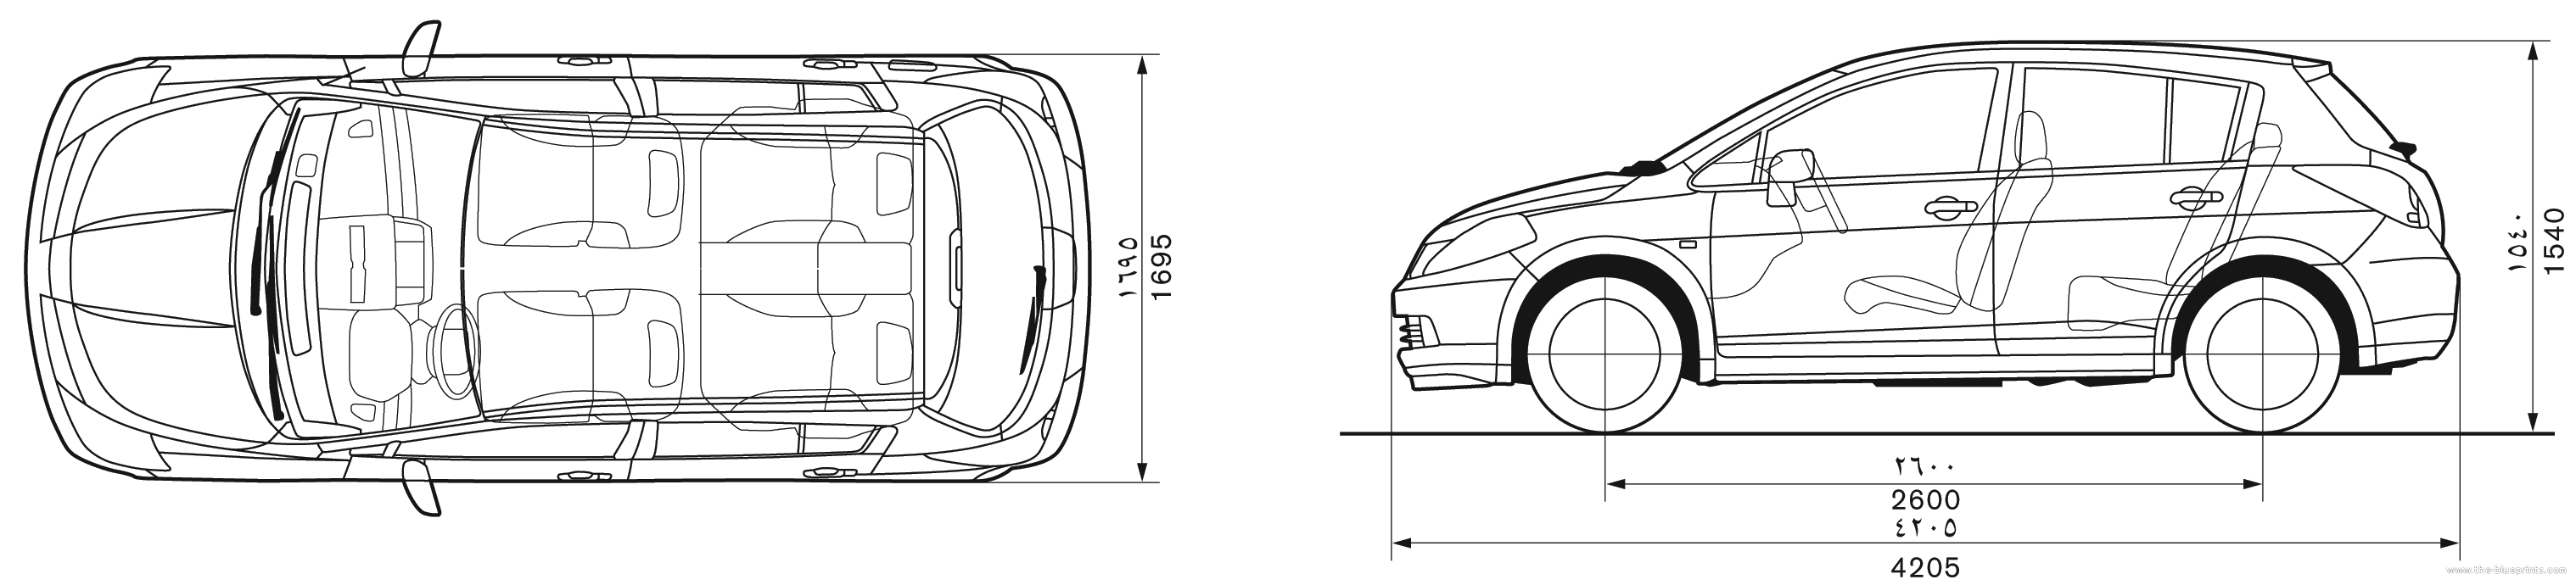 Nissan tiida dimensions #8